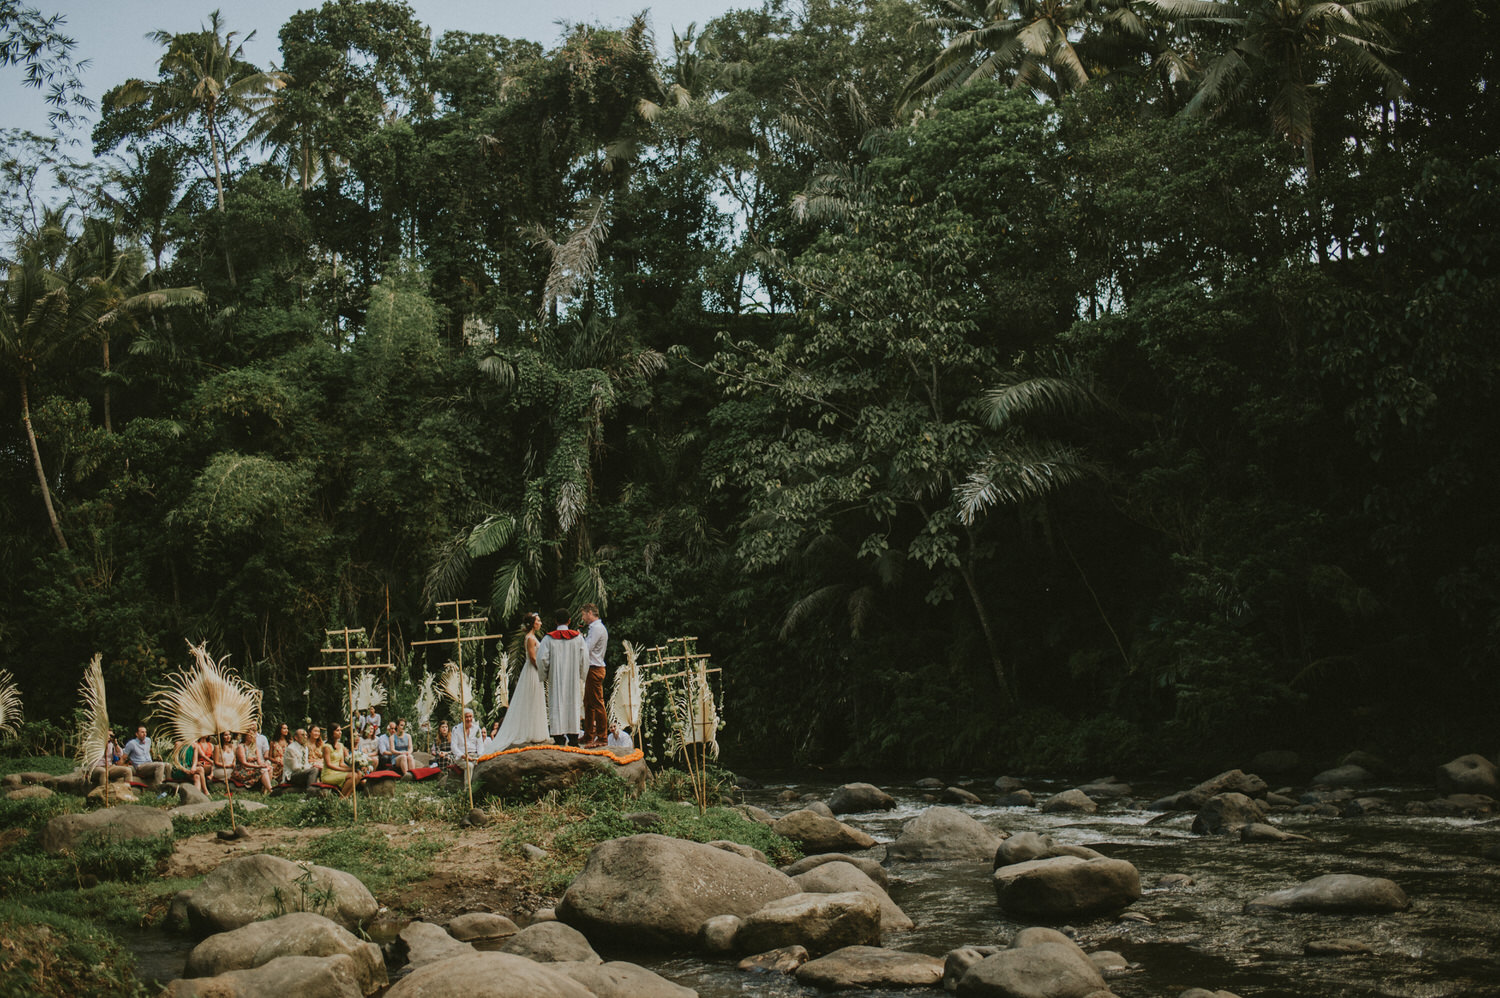 bali-wedding-ubud-wedding-wedding-destination-diktatphotography-kadek-artayasa-elaine-and-glenn-073